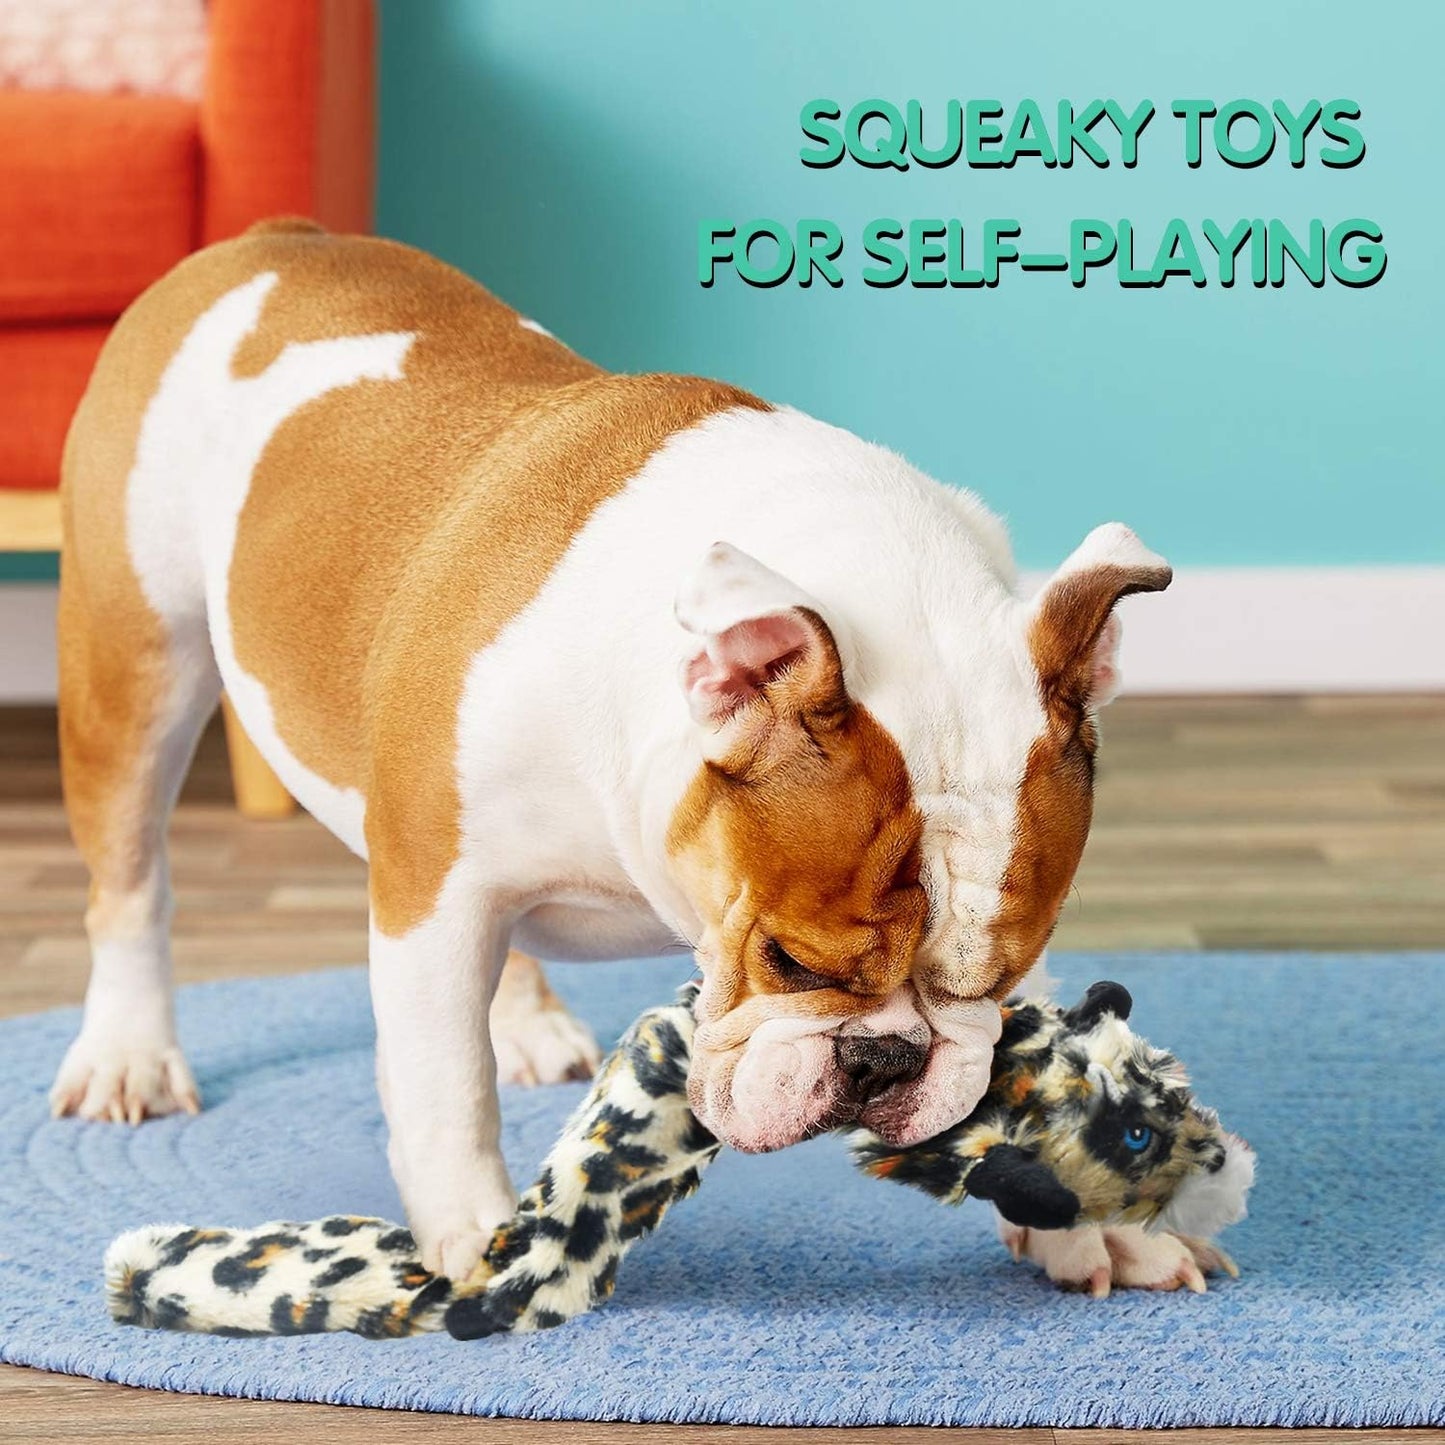 Juguetes chirriantes para perros sin relleno, paquete de 3 juguetes para perros